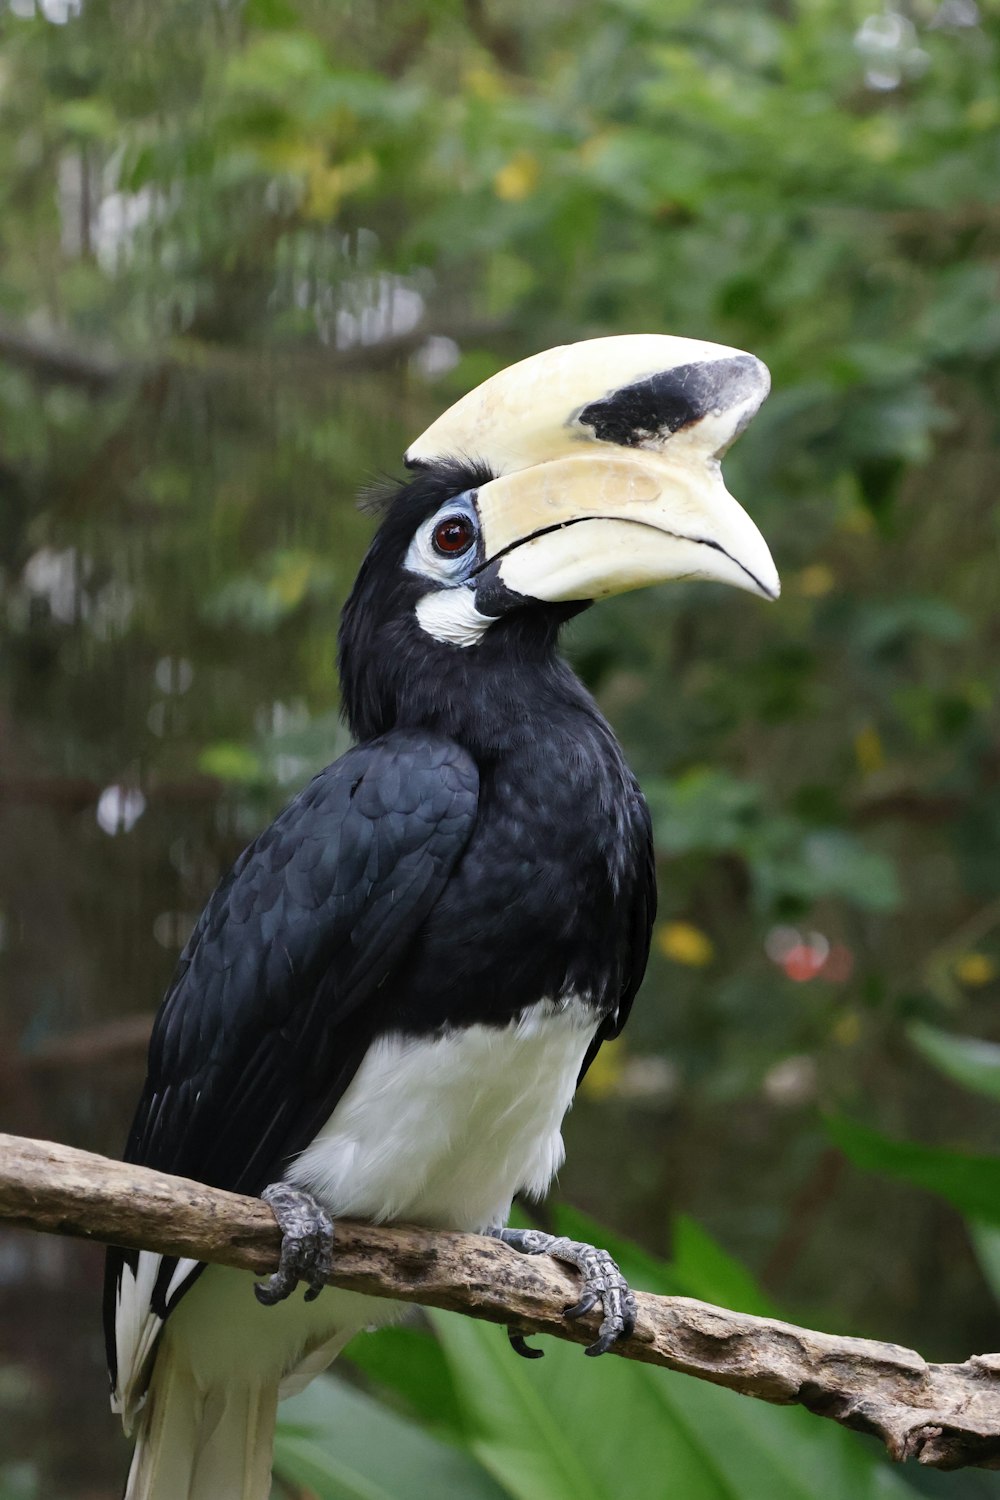 a bird with a yellow beak